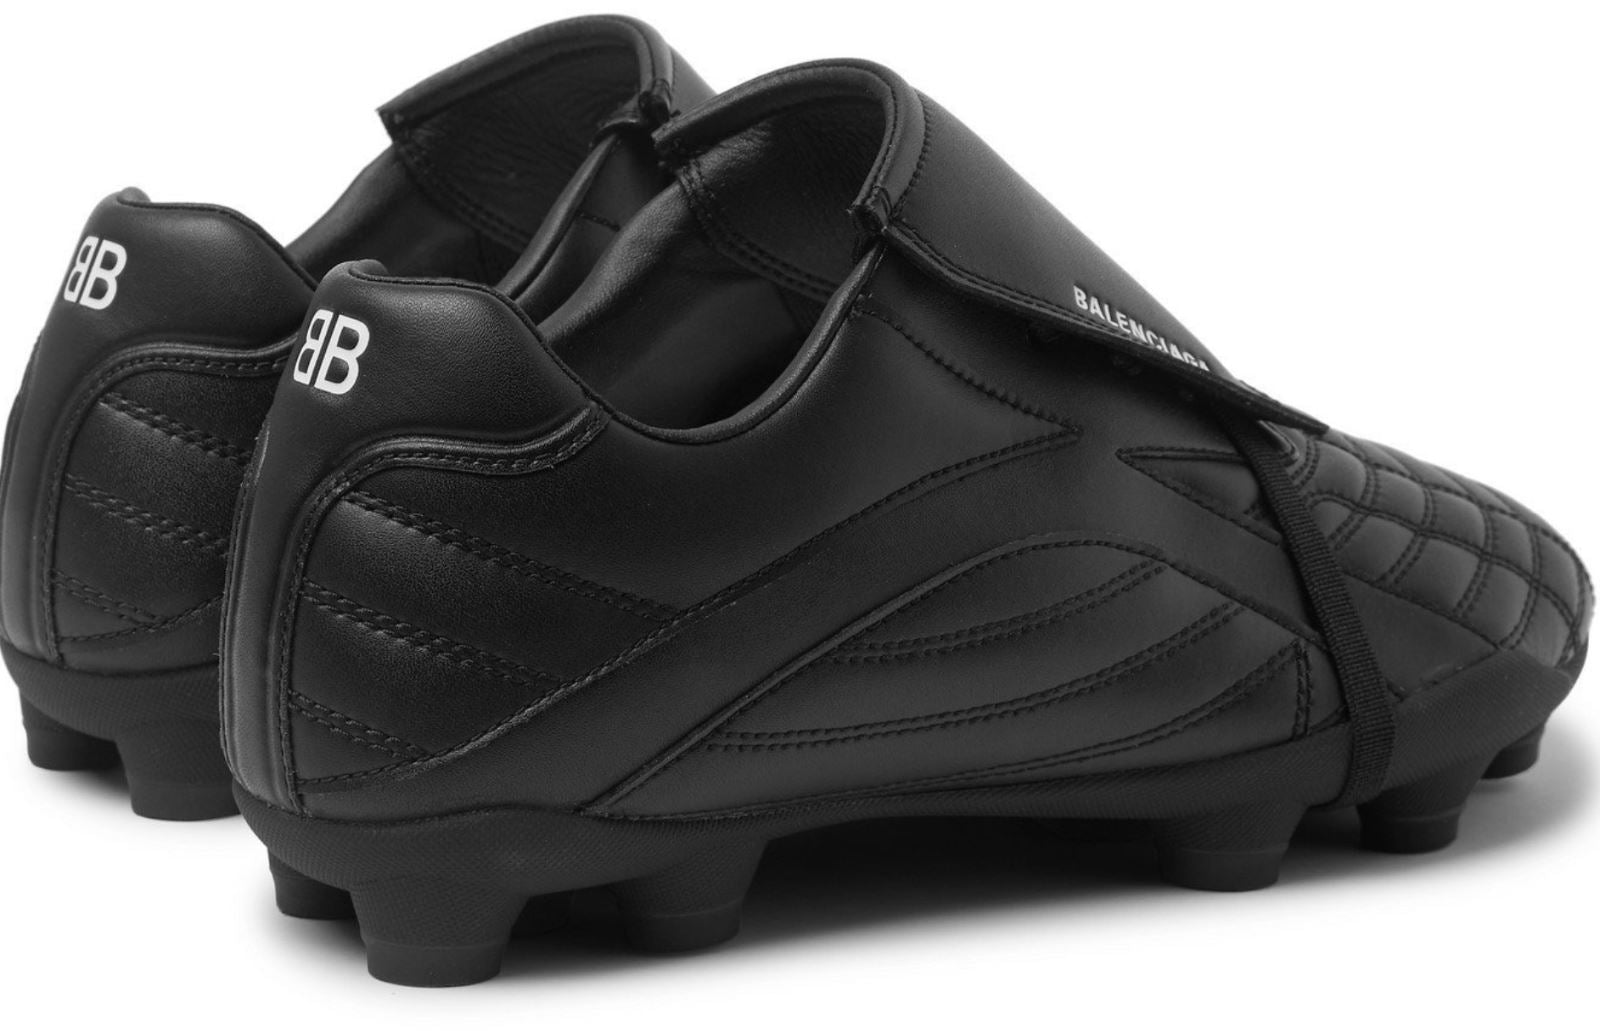 NIB 725 US-Dollar Balenciaga Herren-Sneaker aus Leder mit Socken, Schwarz, 8 US (41 Euro) 